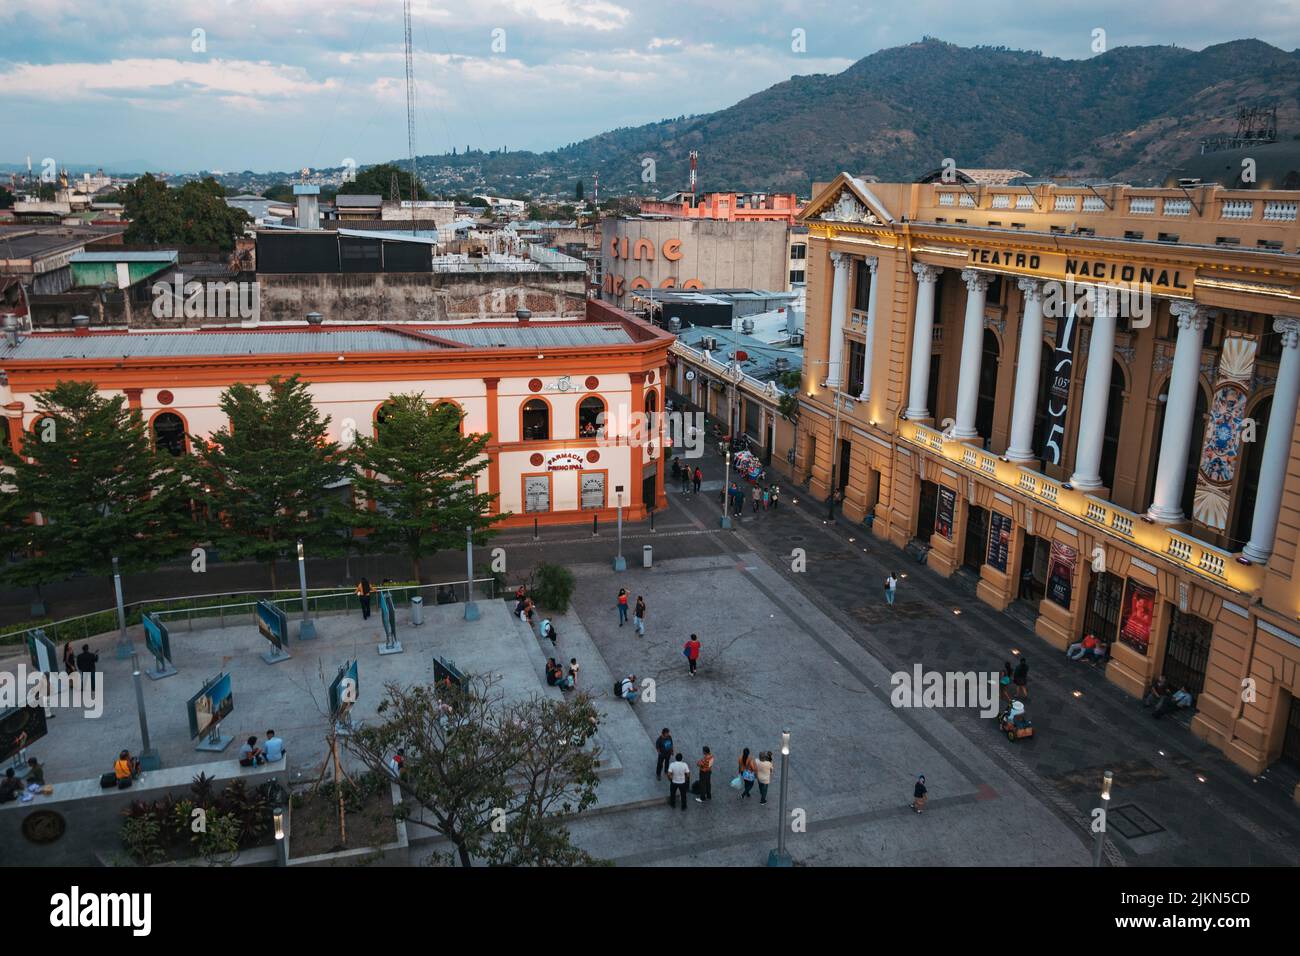 the National Theatre building in the San Salvador city center, El Salvador Stock Photo